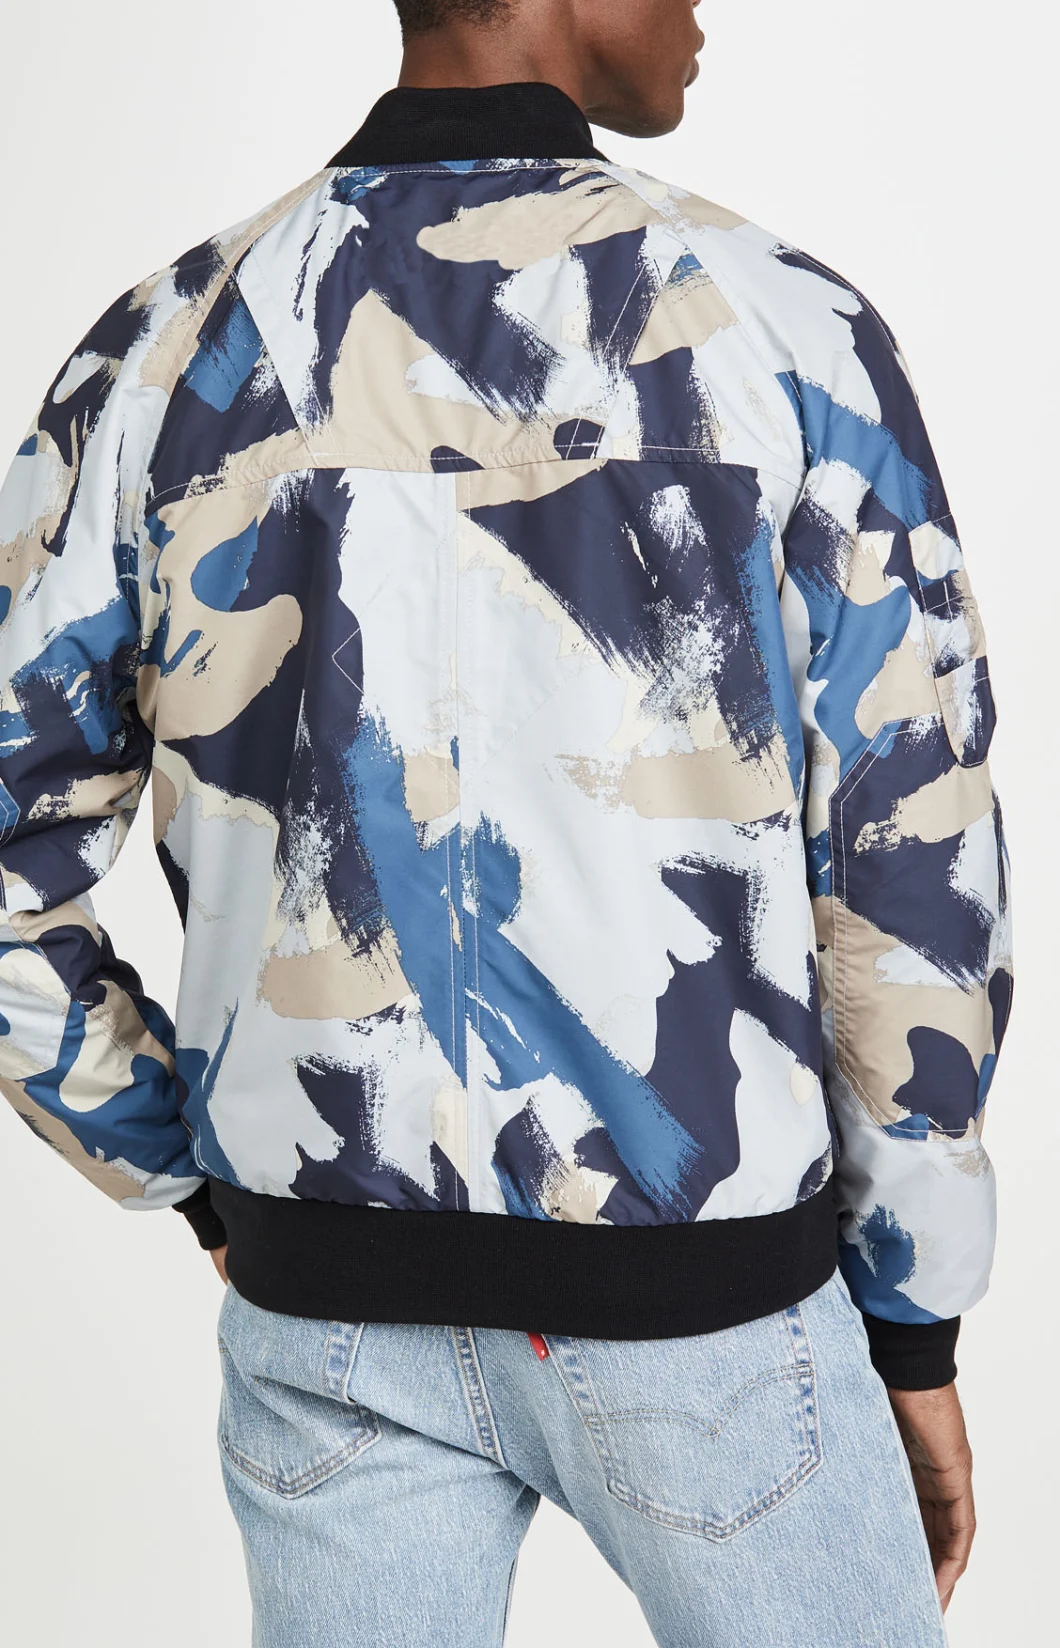 Wholesale Custom Mens Camouflage Jackets New Designs Bomber Jackets&Coats for Men Winter Warm Jackets